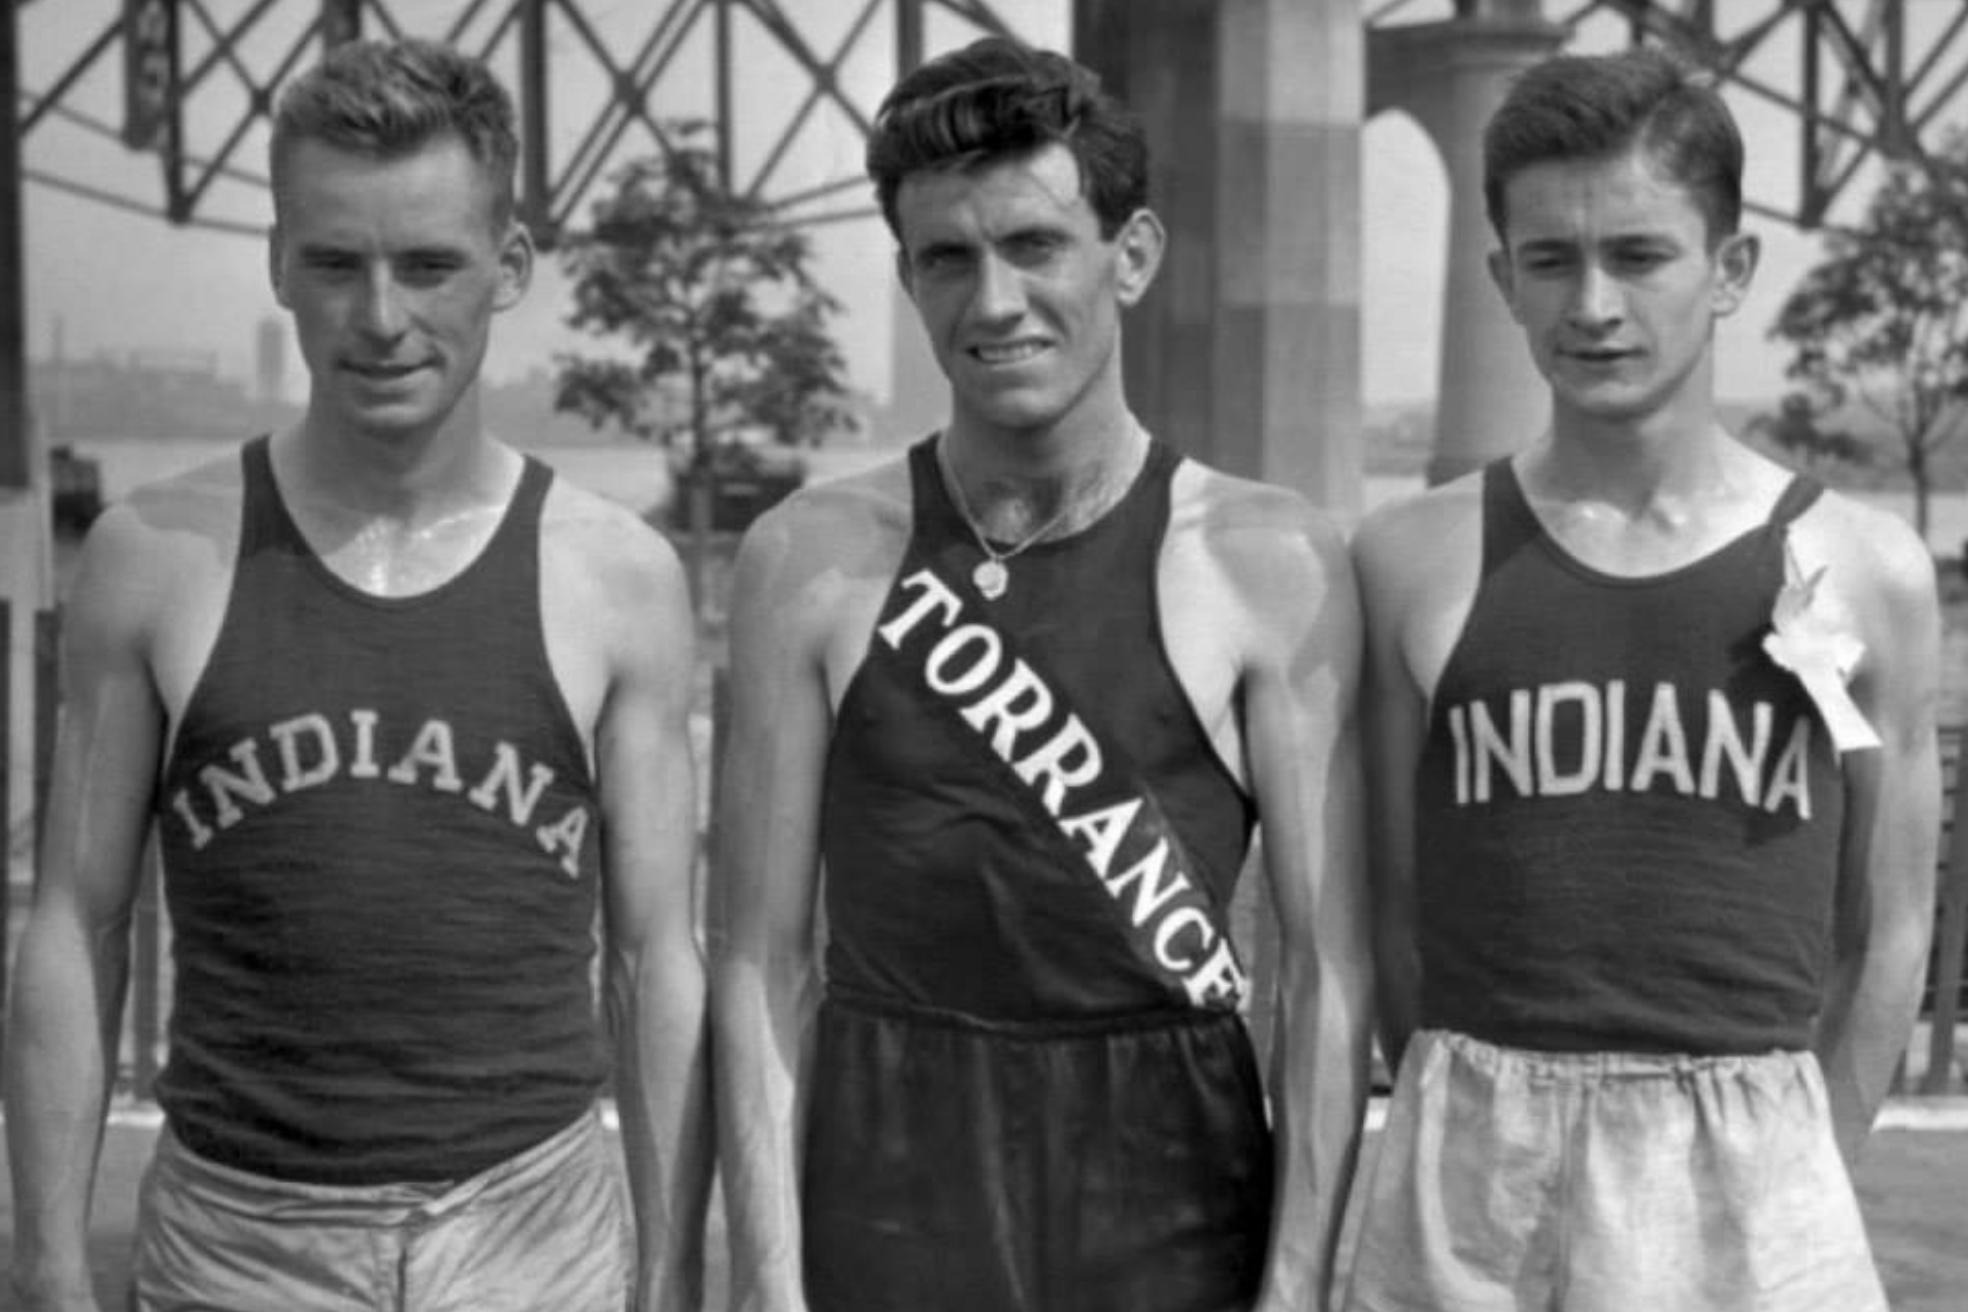 Vintage photo of athletes